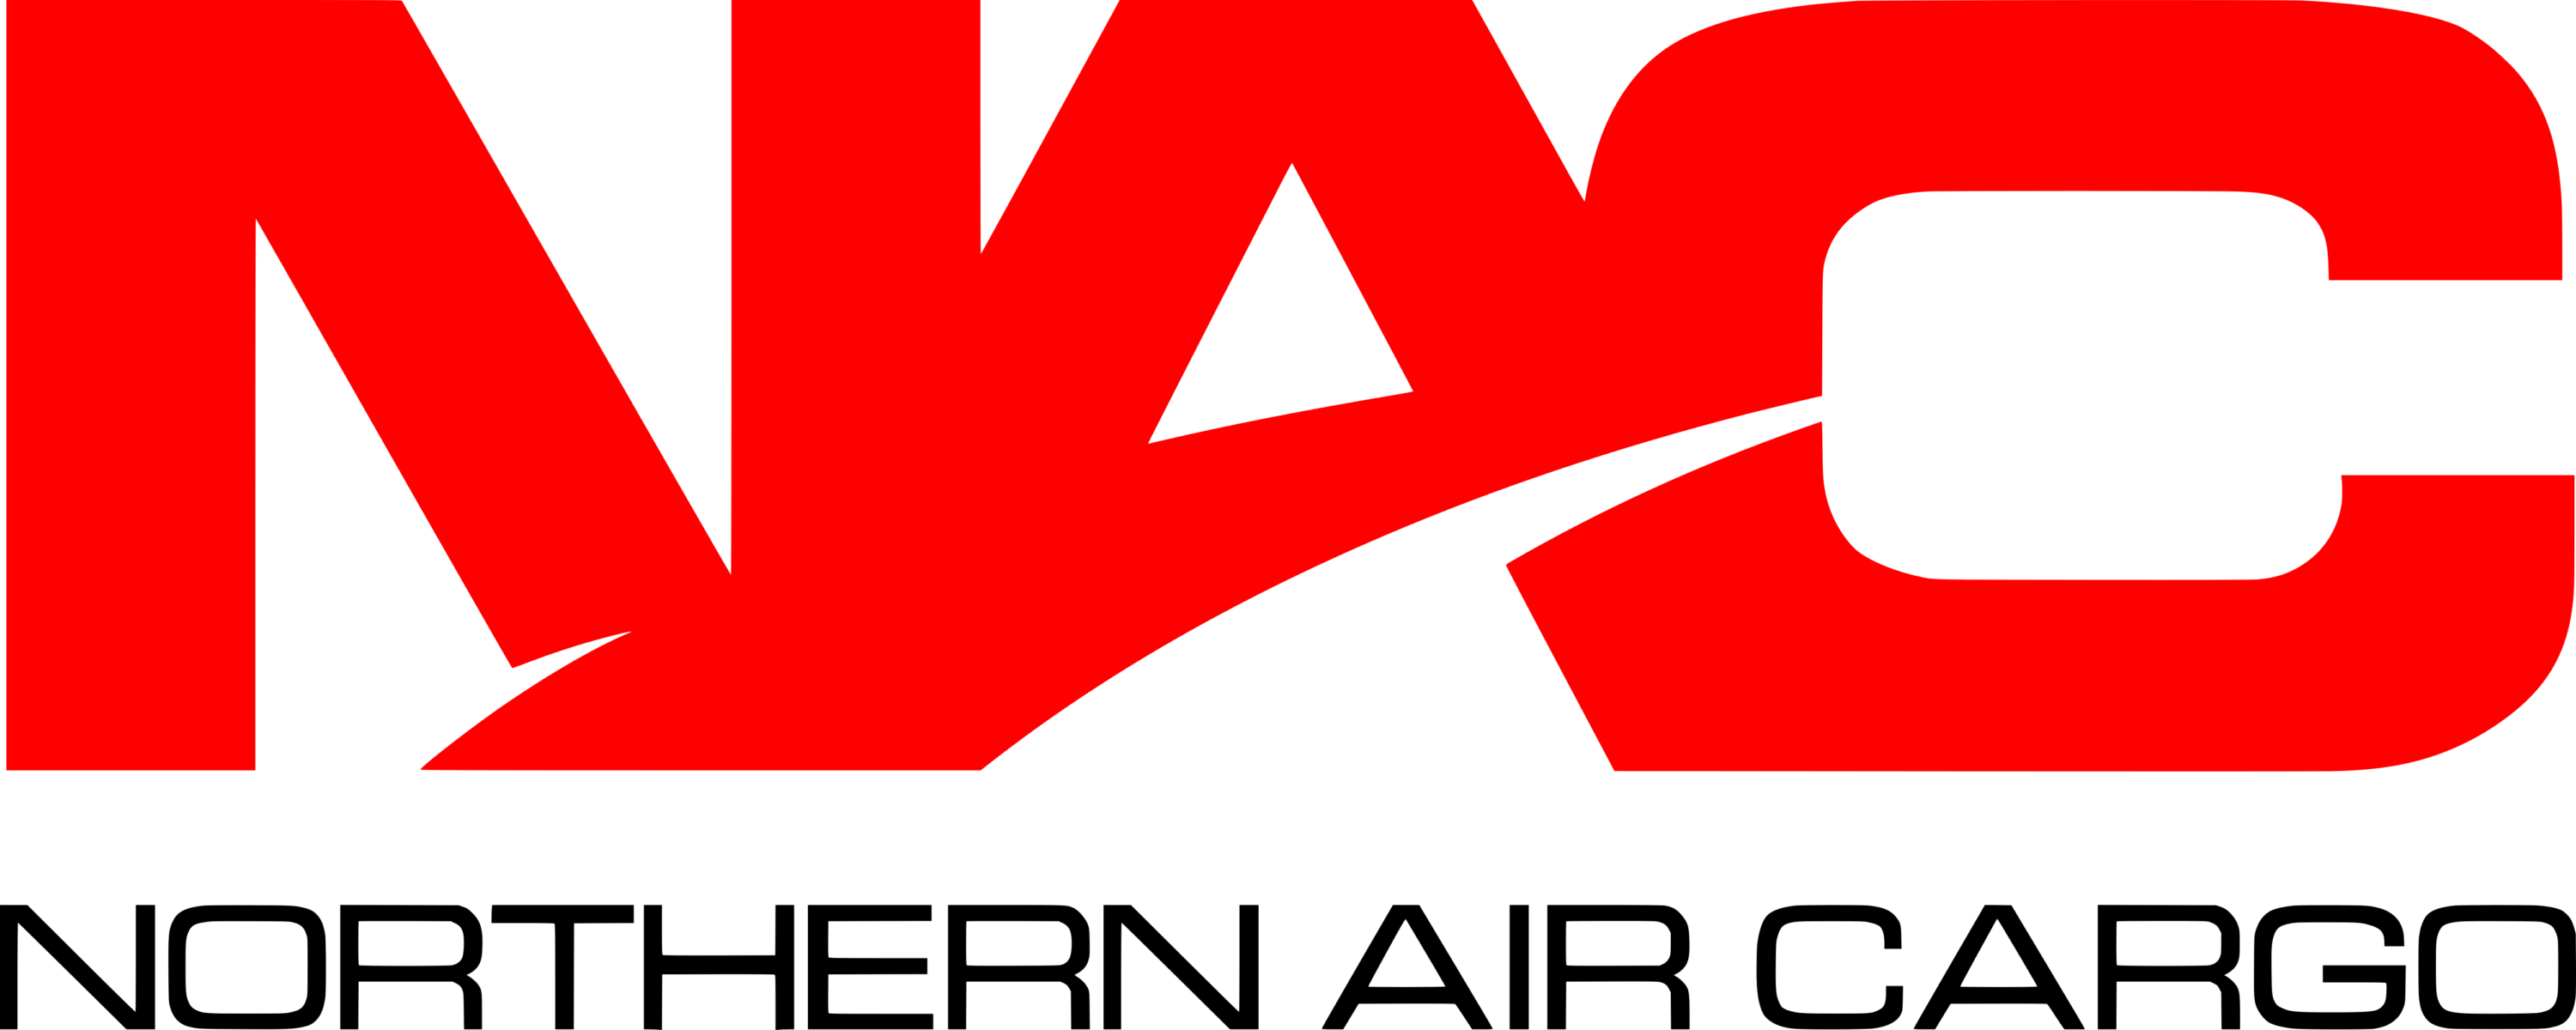 Northern Air Cargo Logo